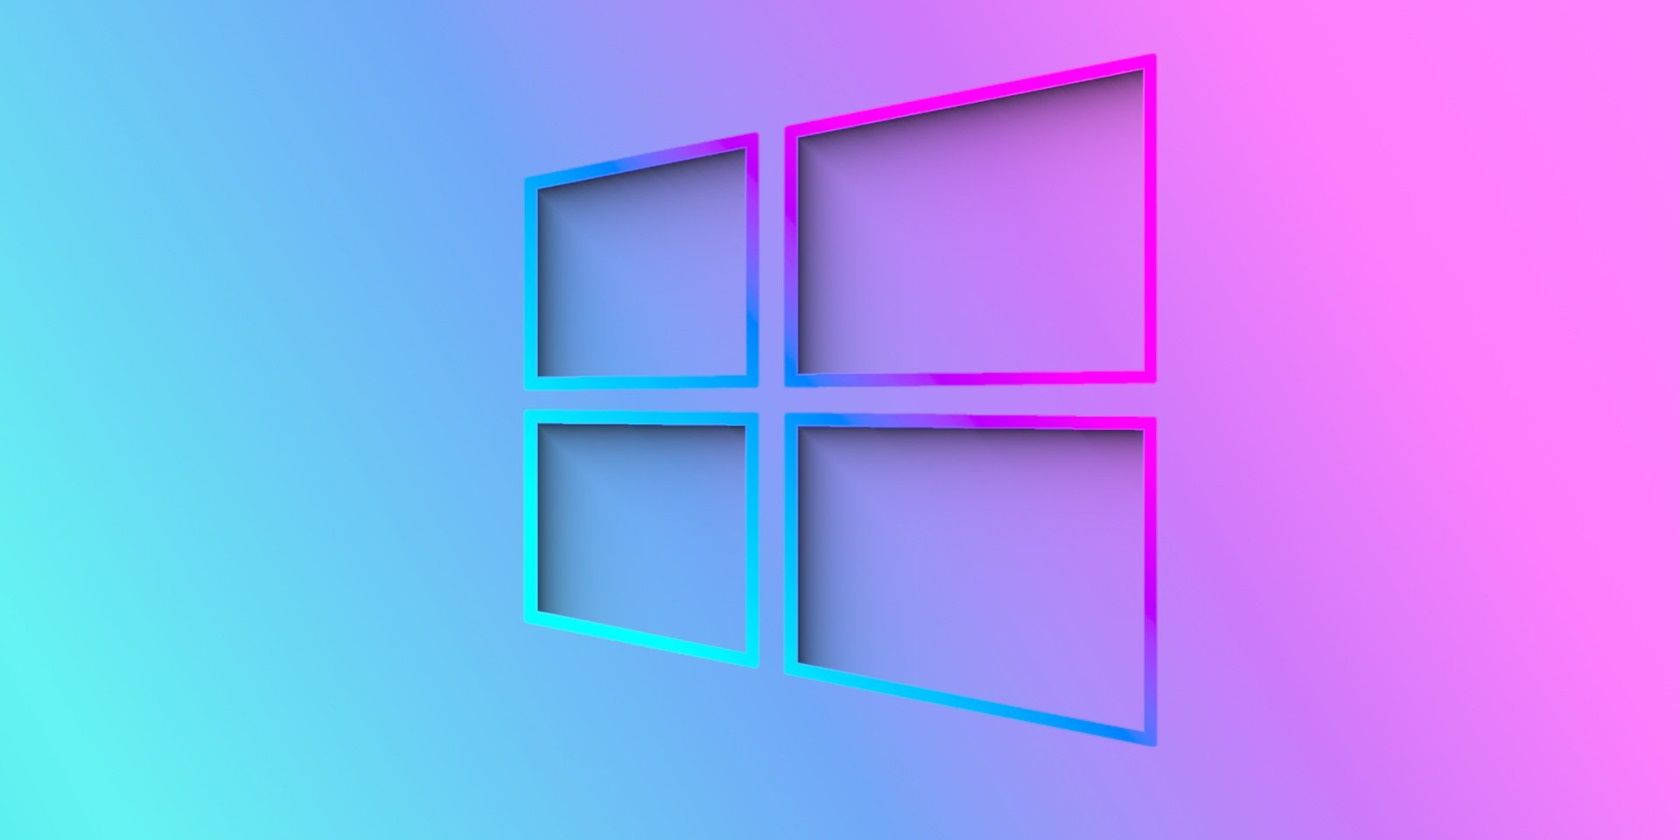 Windows 10 Spotlight Lock Screen Underground Wallpapers